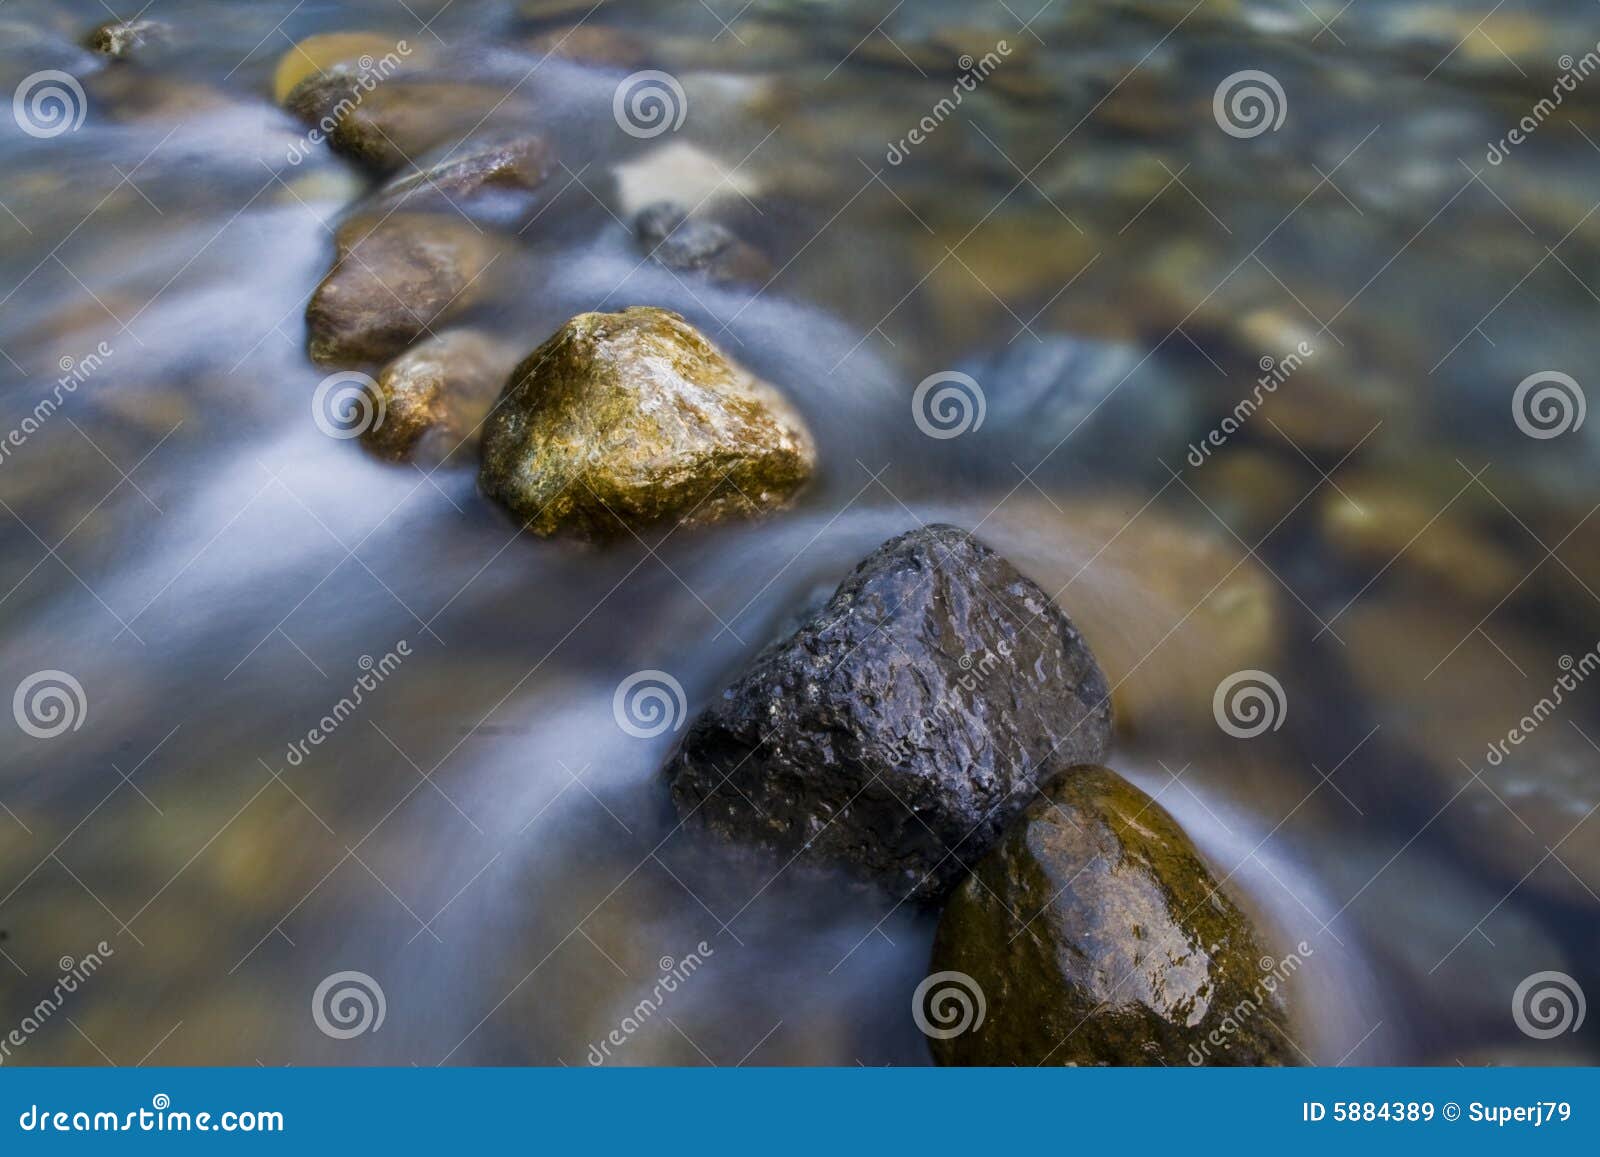 the stones in streams